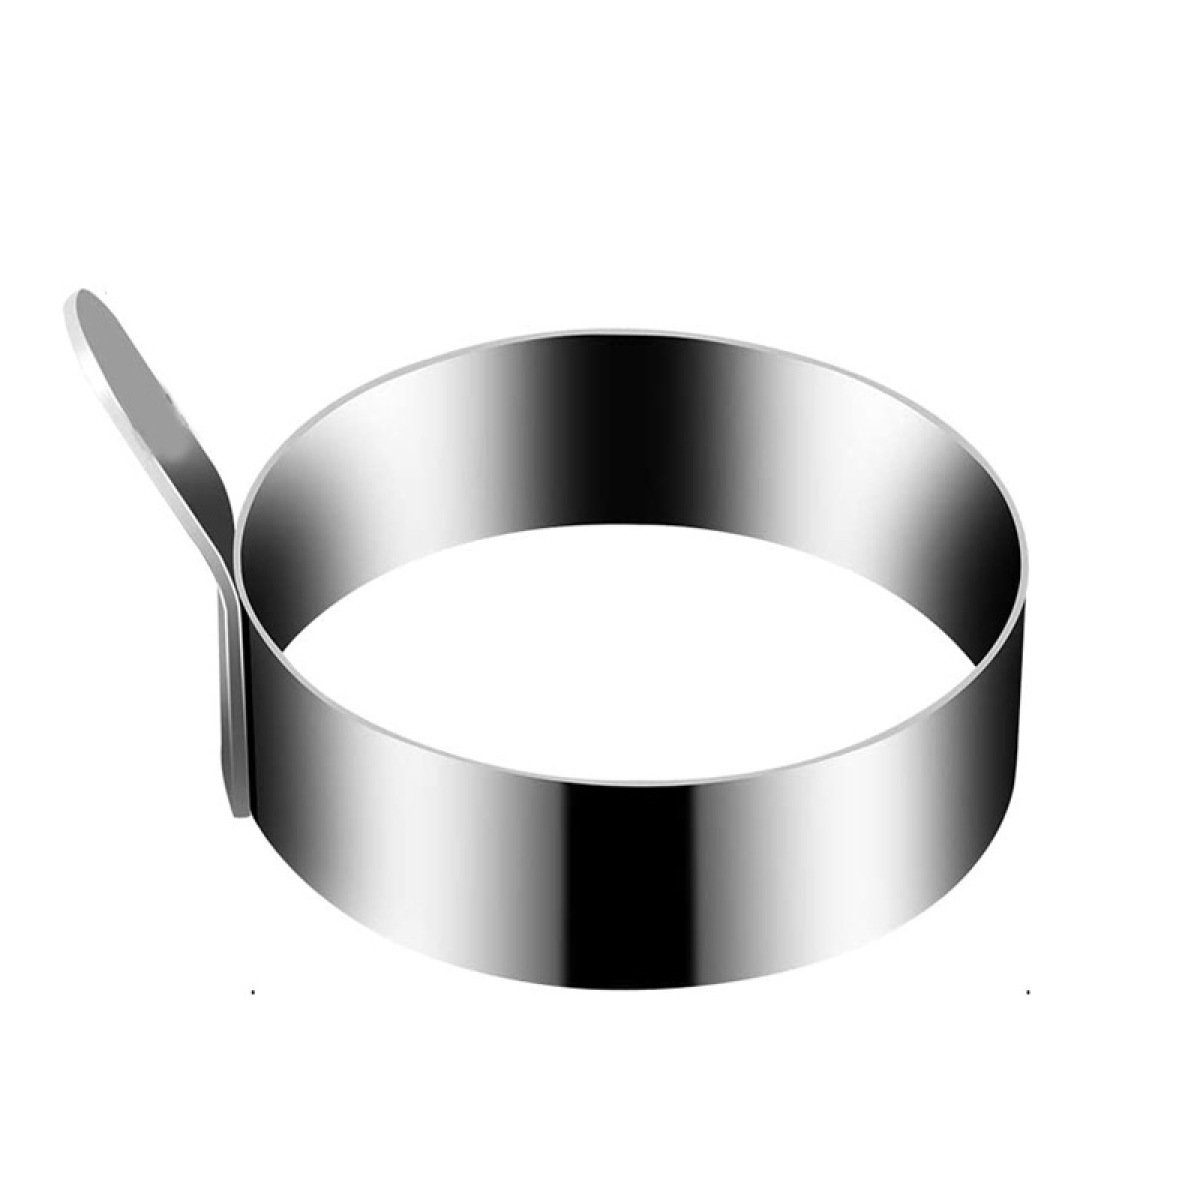 Edelstahl Jormftte für Pancake Ring Antihaft Spiegeleiform Form,Egg Backform Spiegelei